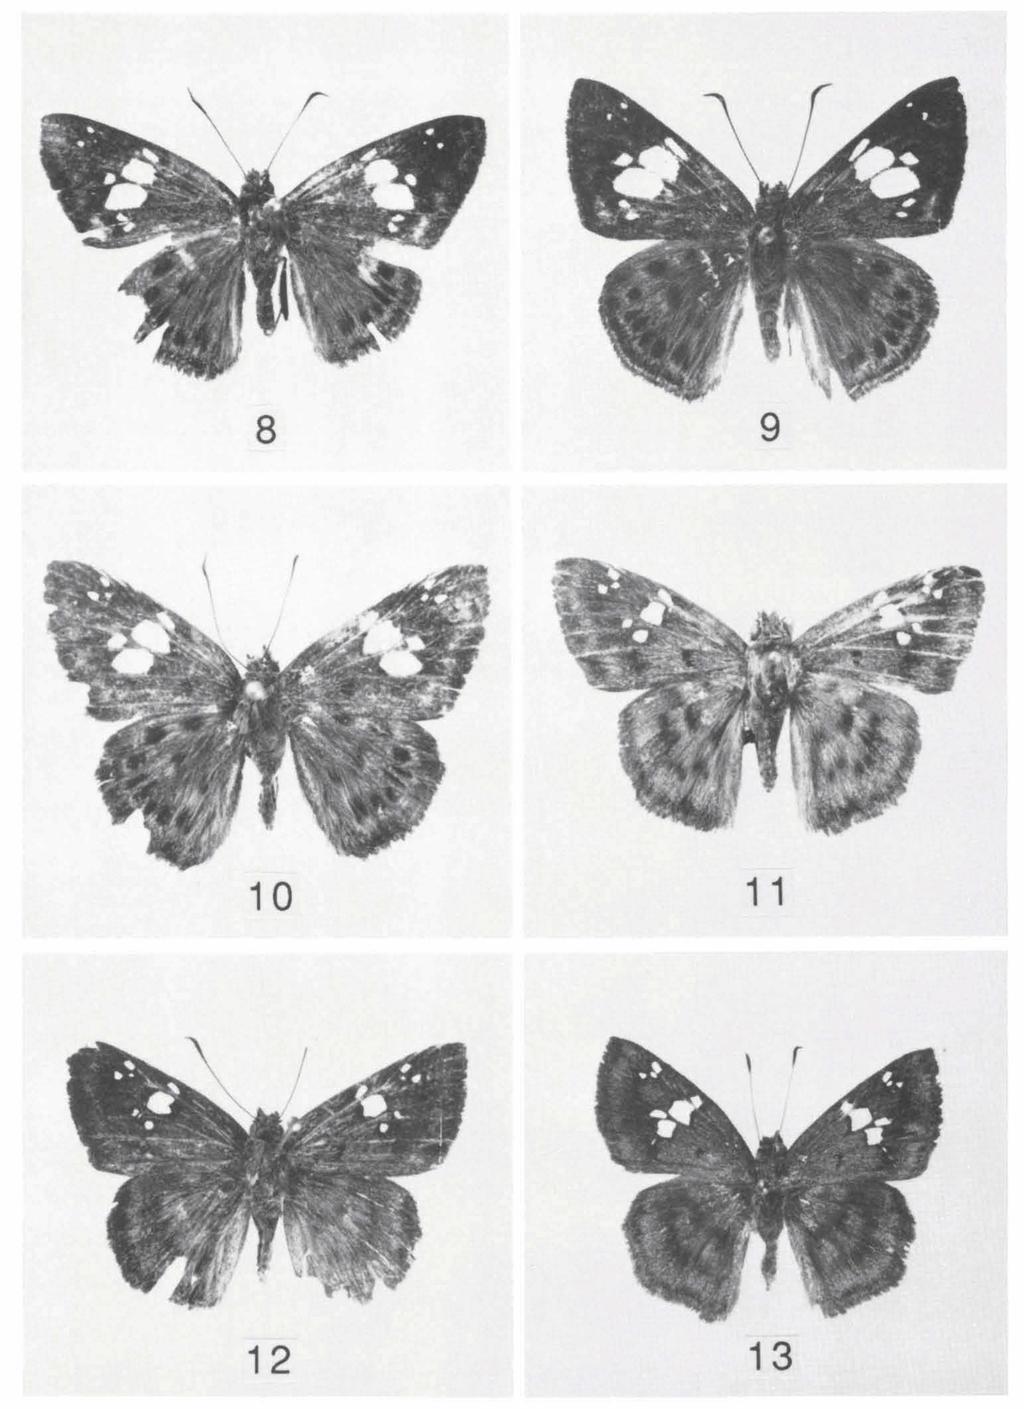 DE JONG & TREADAWAY: REVISIONAL NOTES ON COLADENIA 293 Figs. 8-13. Upperside of Coladenia species. 8, C. igna igna (Semper, 1892), holotype; 9, C. igna marinda subspec. nov.